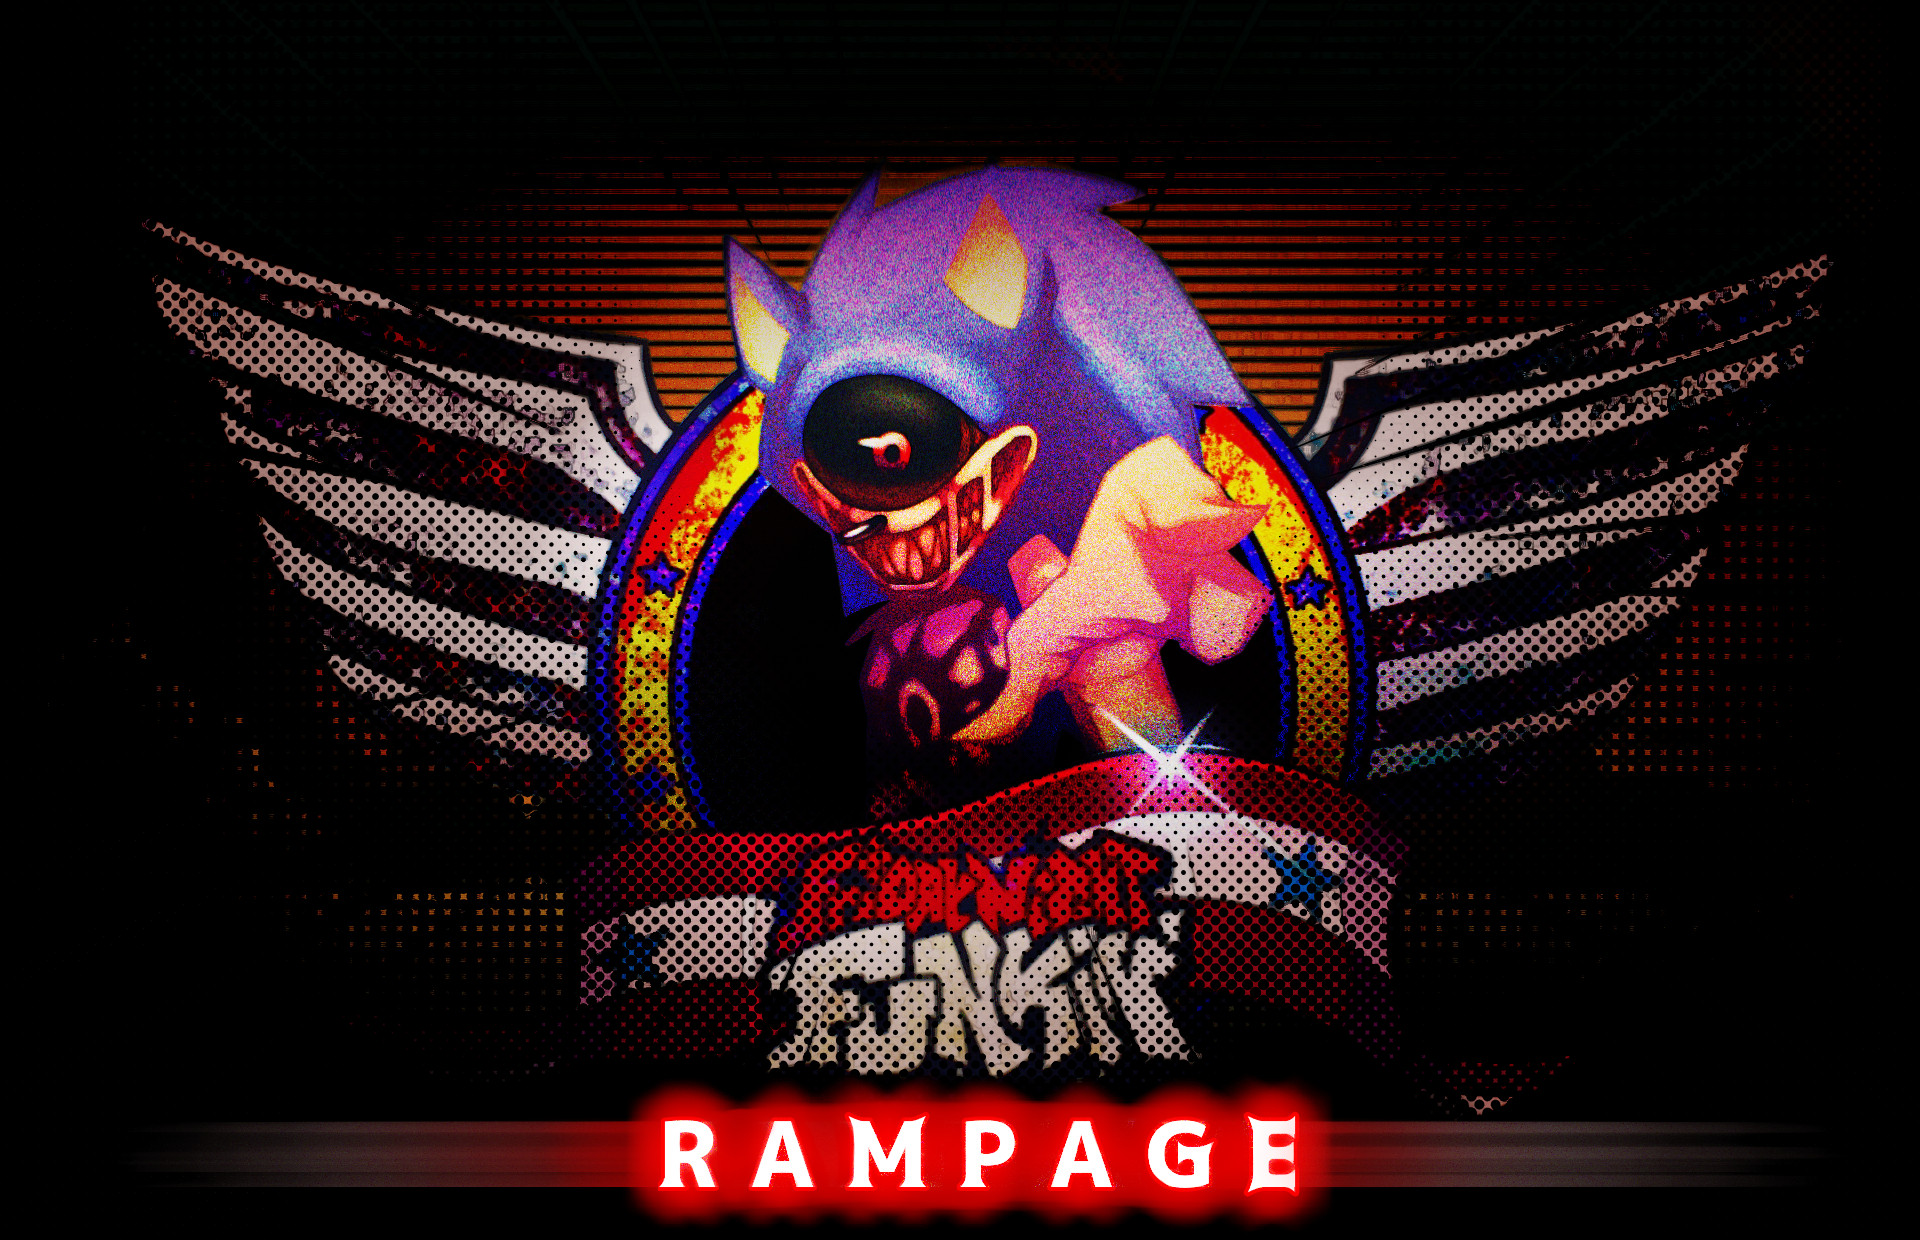 Friday Night Funkin' x Item Asylum: RNG Rampage [Friday Night Funkin']  [Mods]